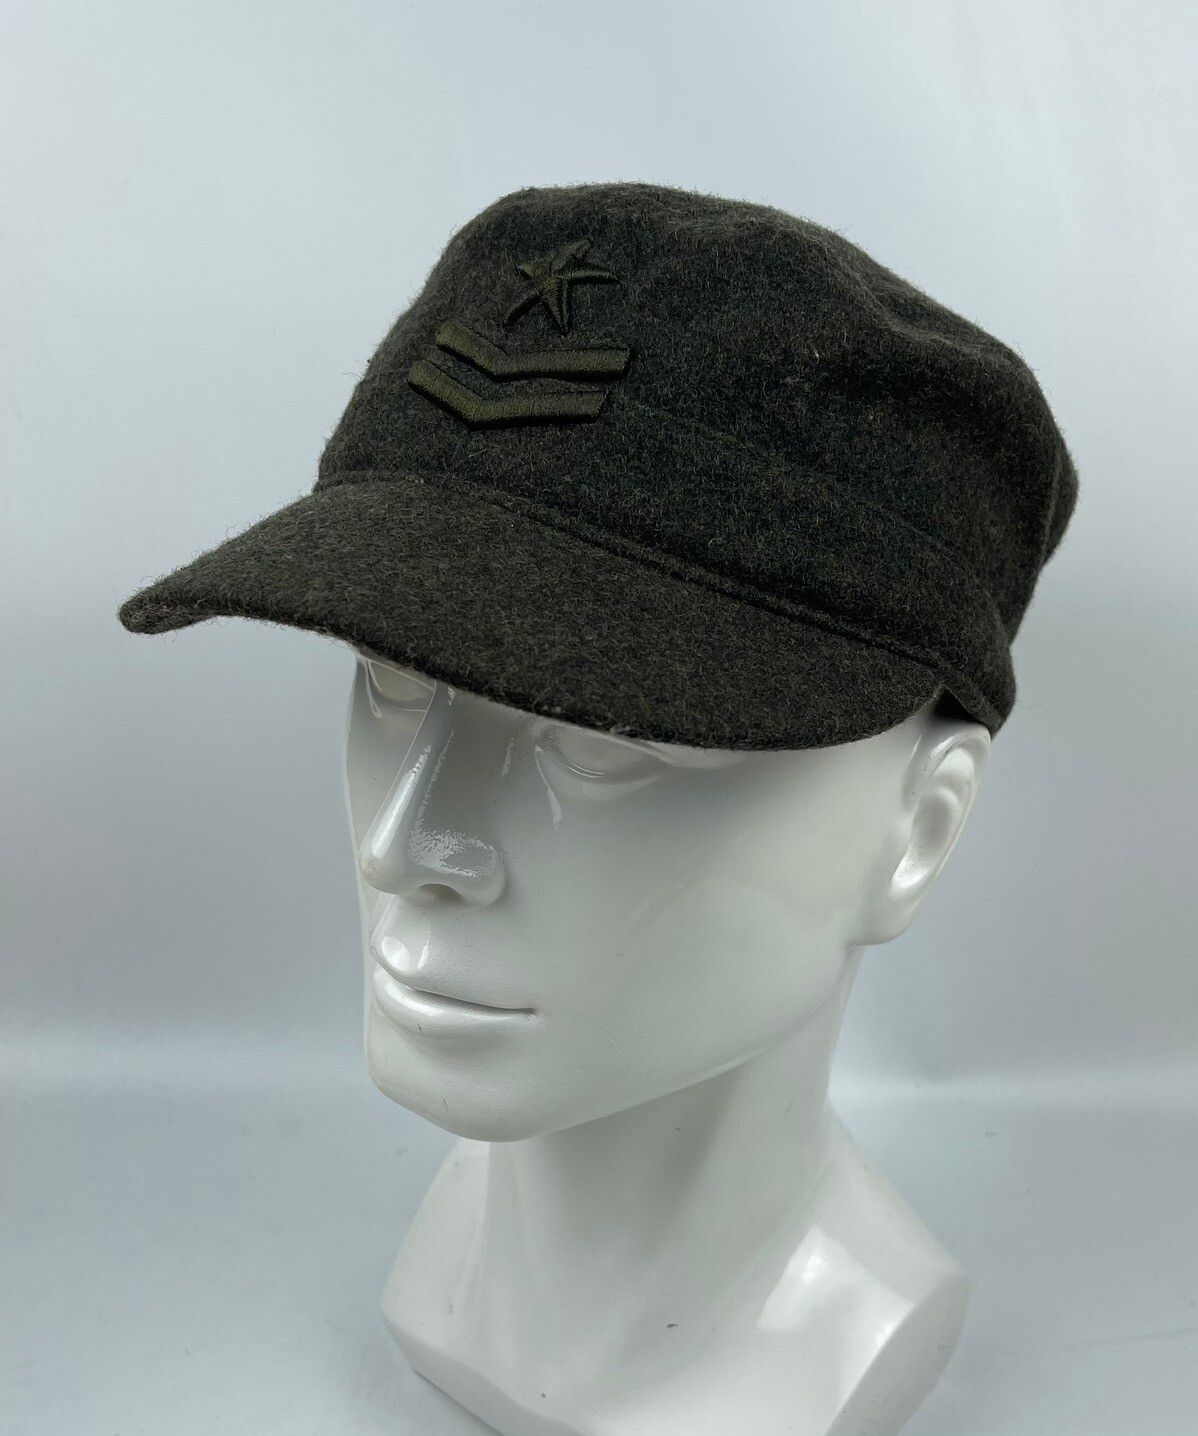 diesel hat cap military style tc7 - 1